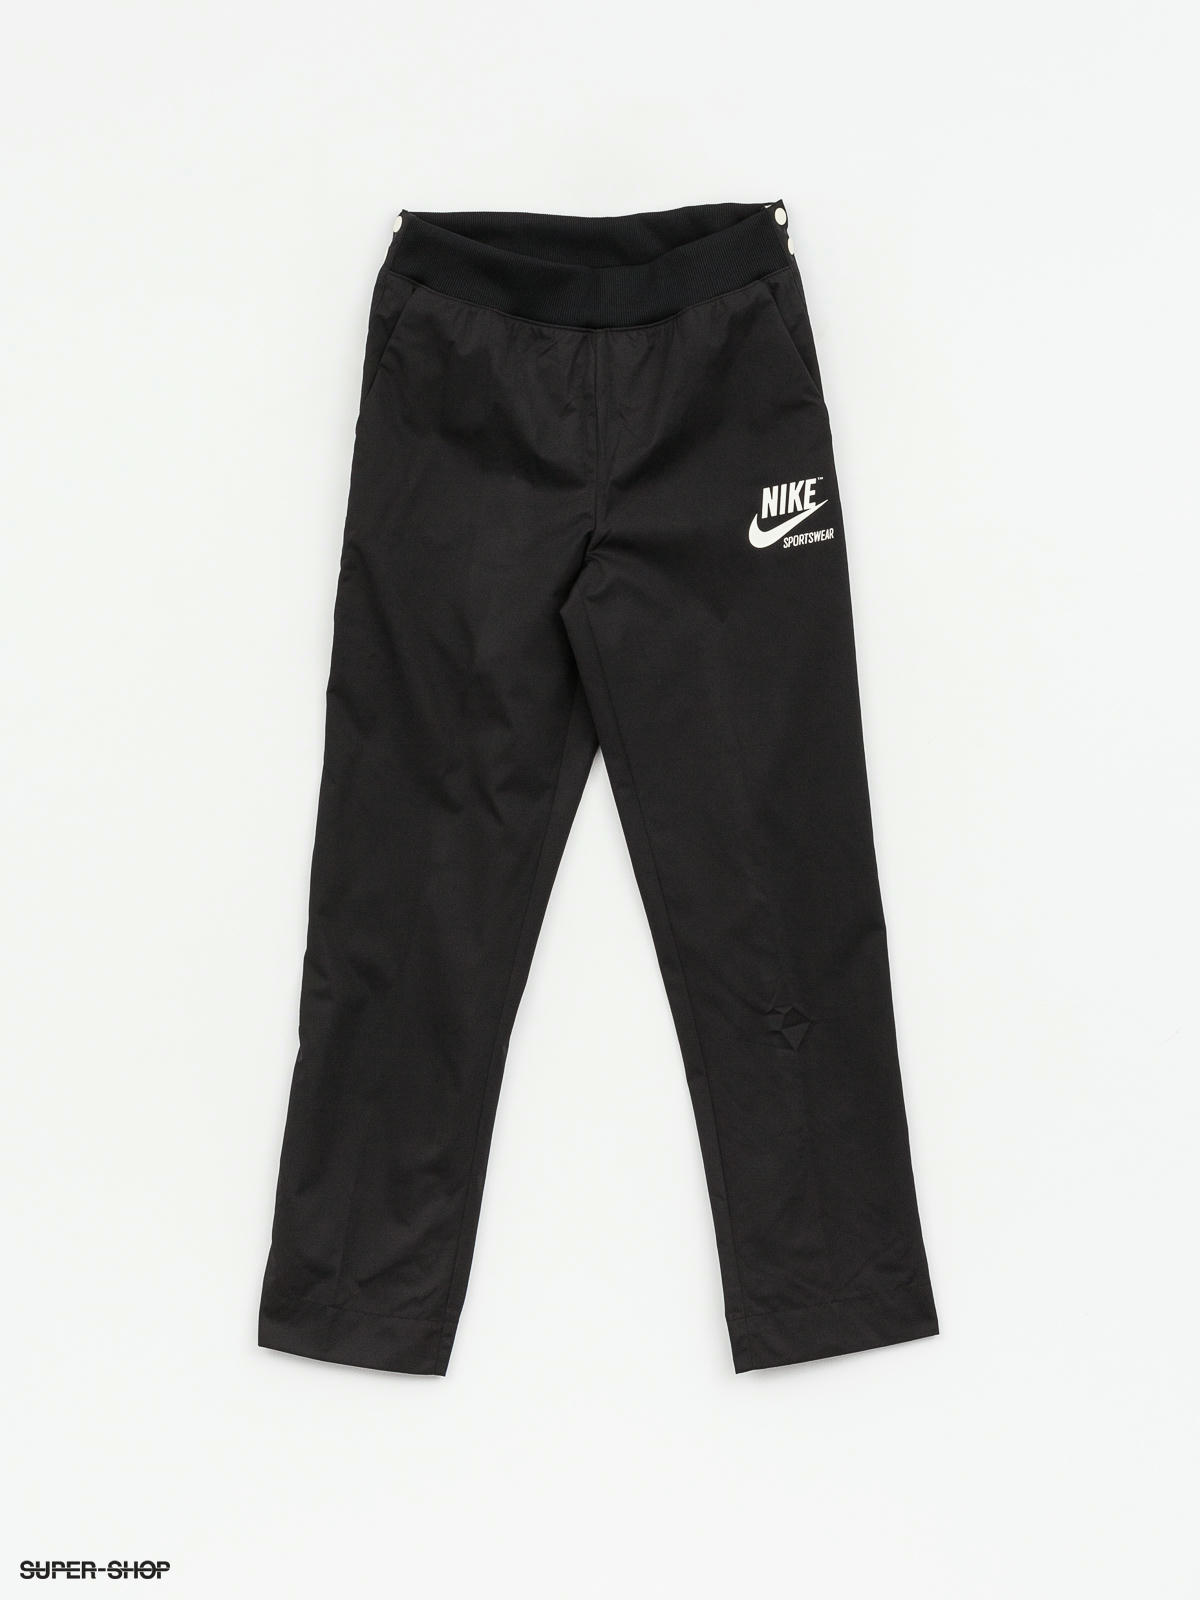 Nike Sportswear Archive Women's Snap Pants Sizes Large Style 920915 451